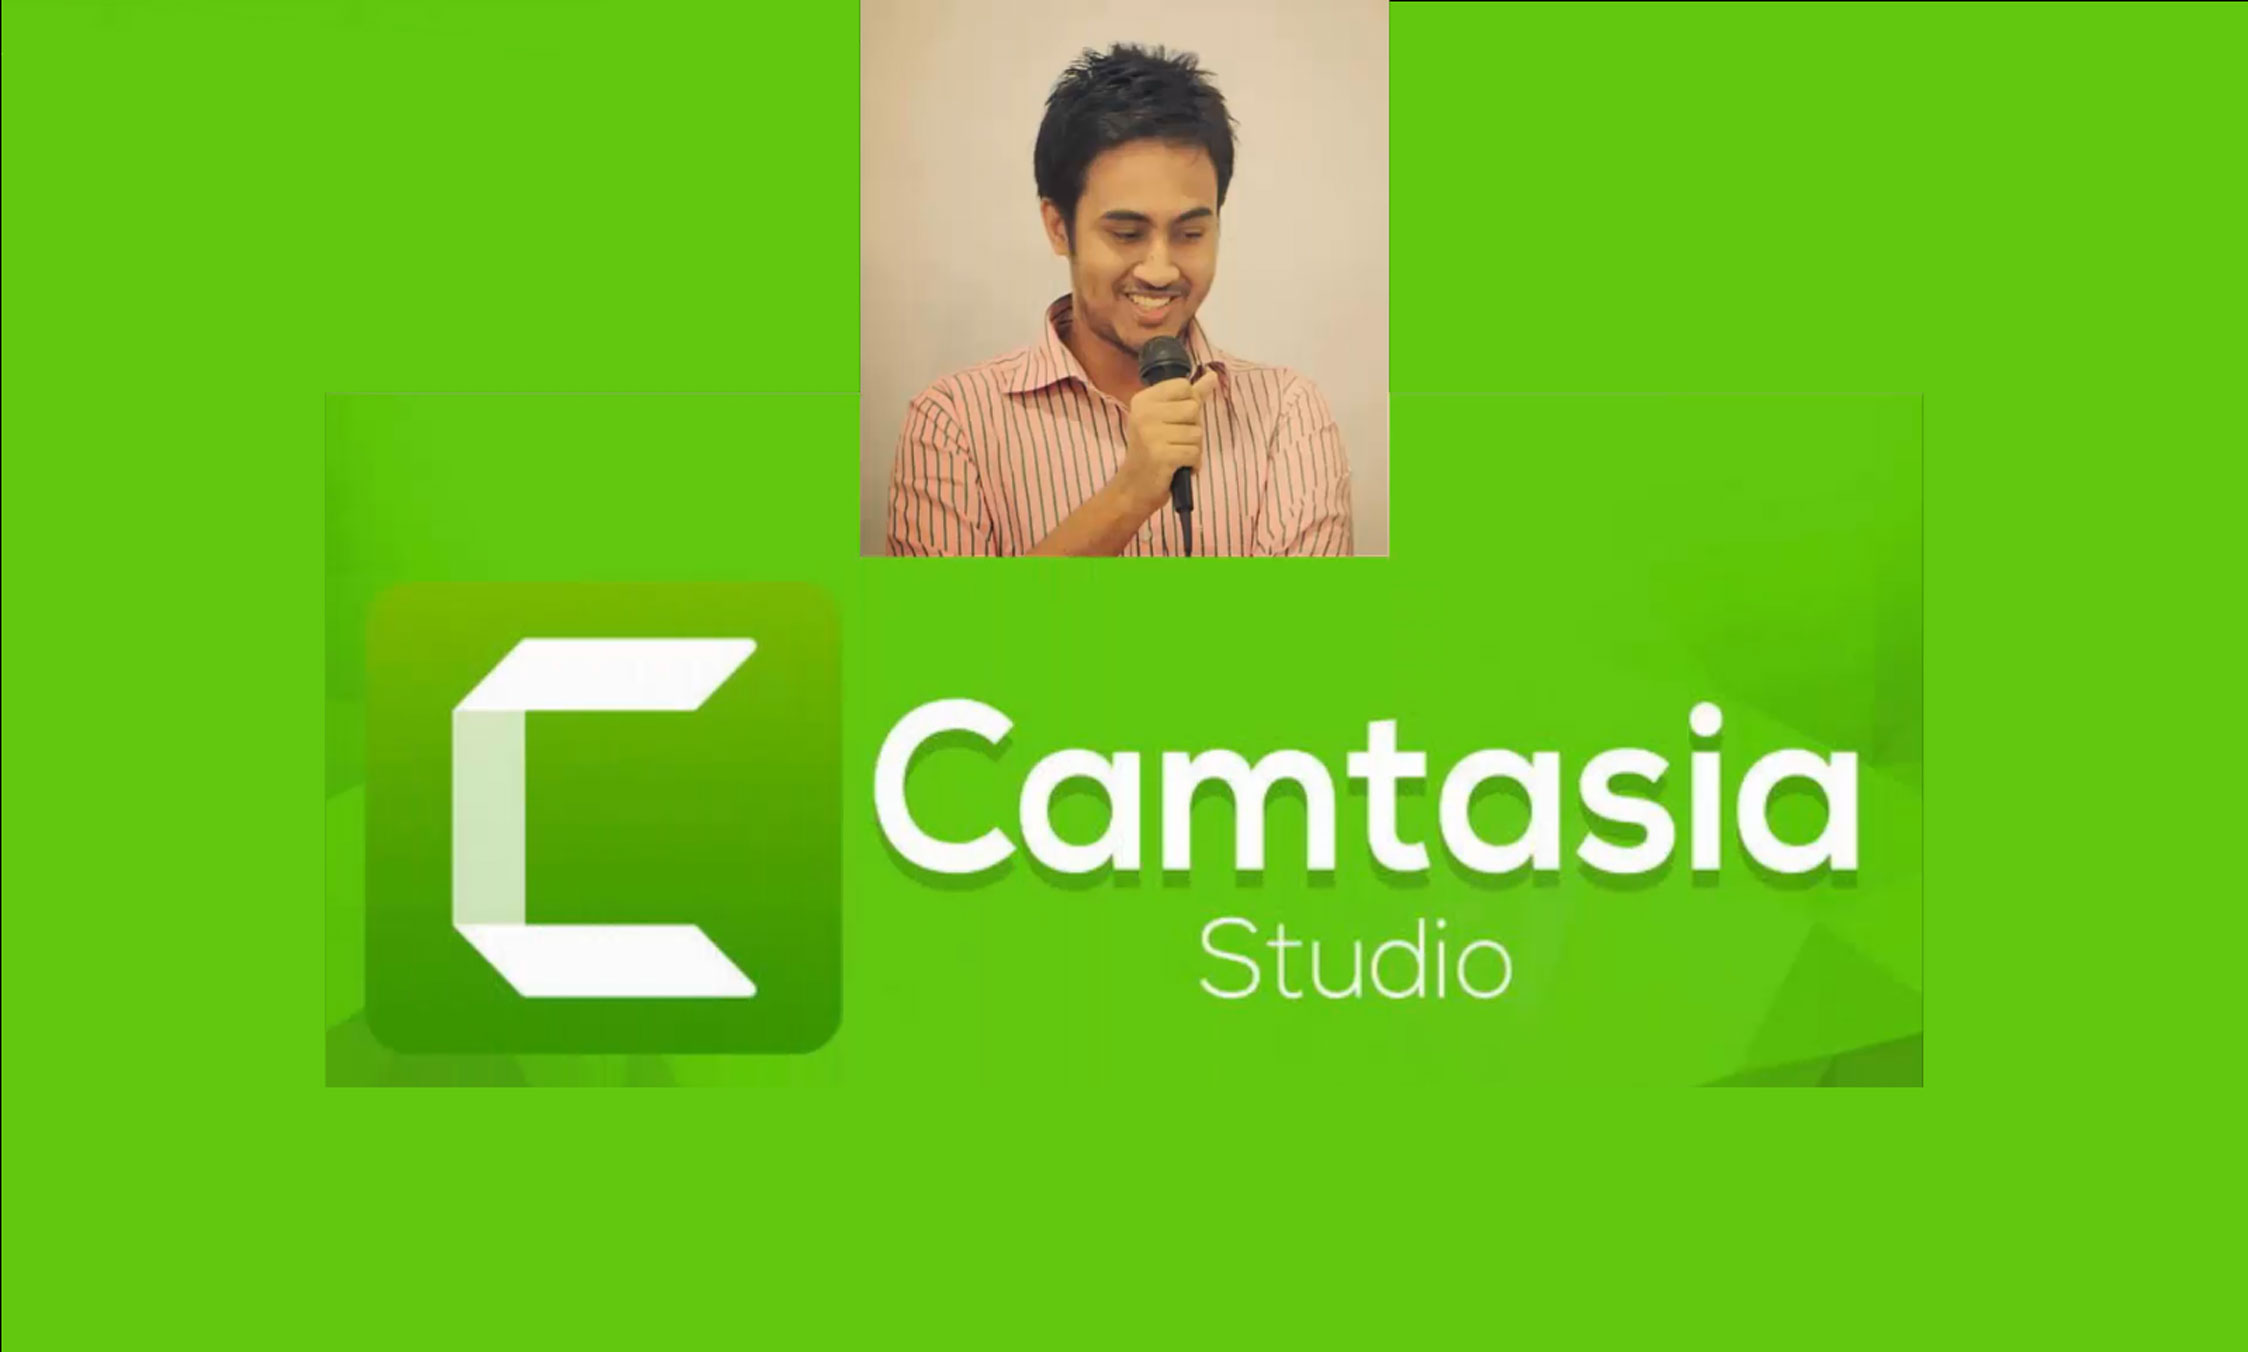 Camtasia Studio 9 Masterclass